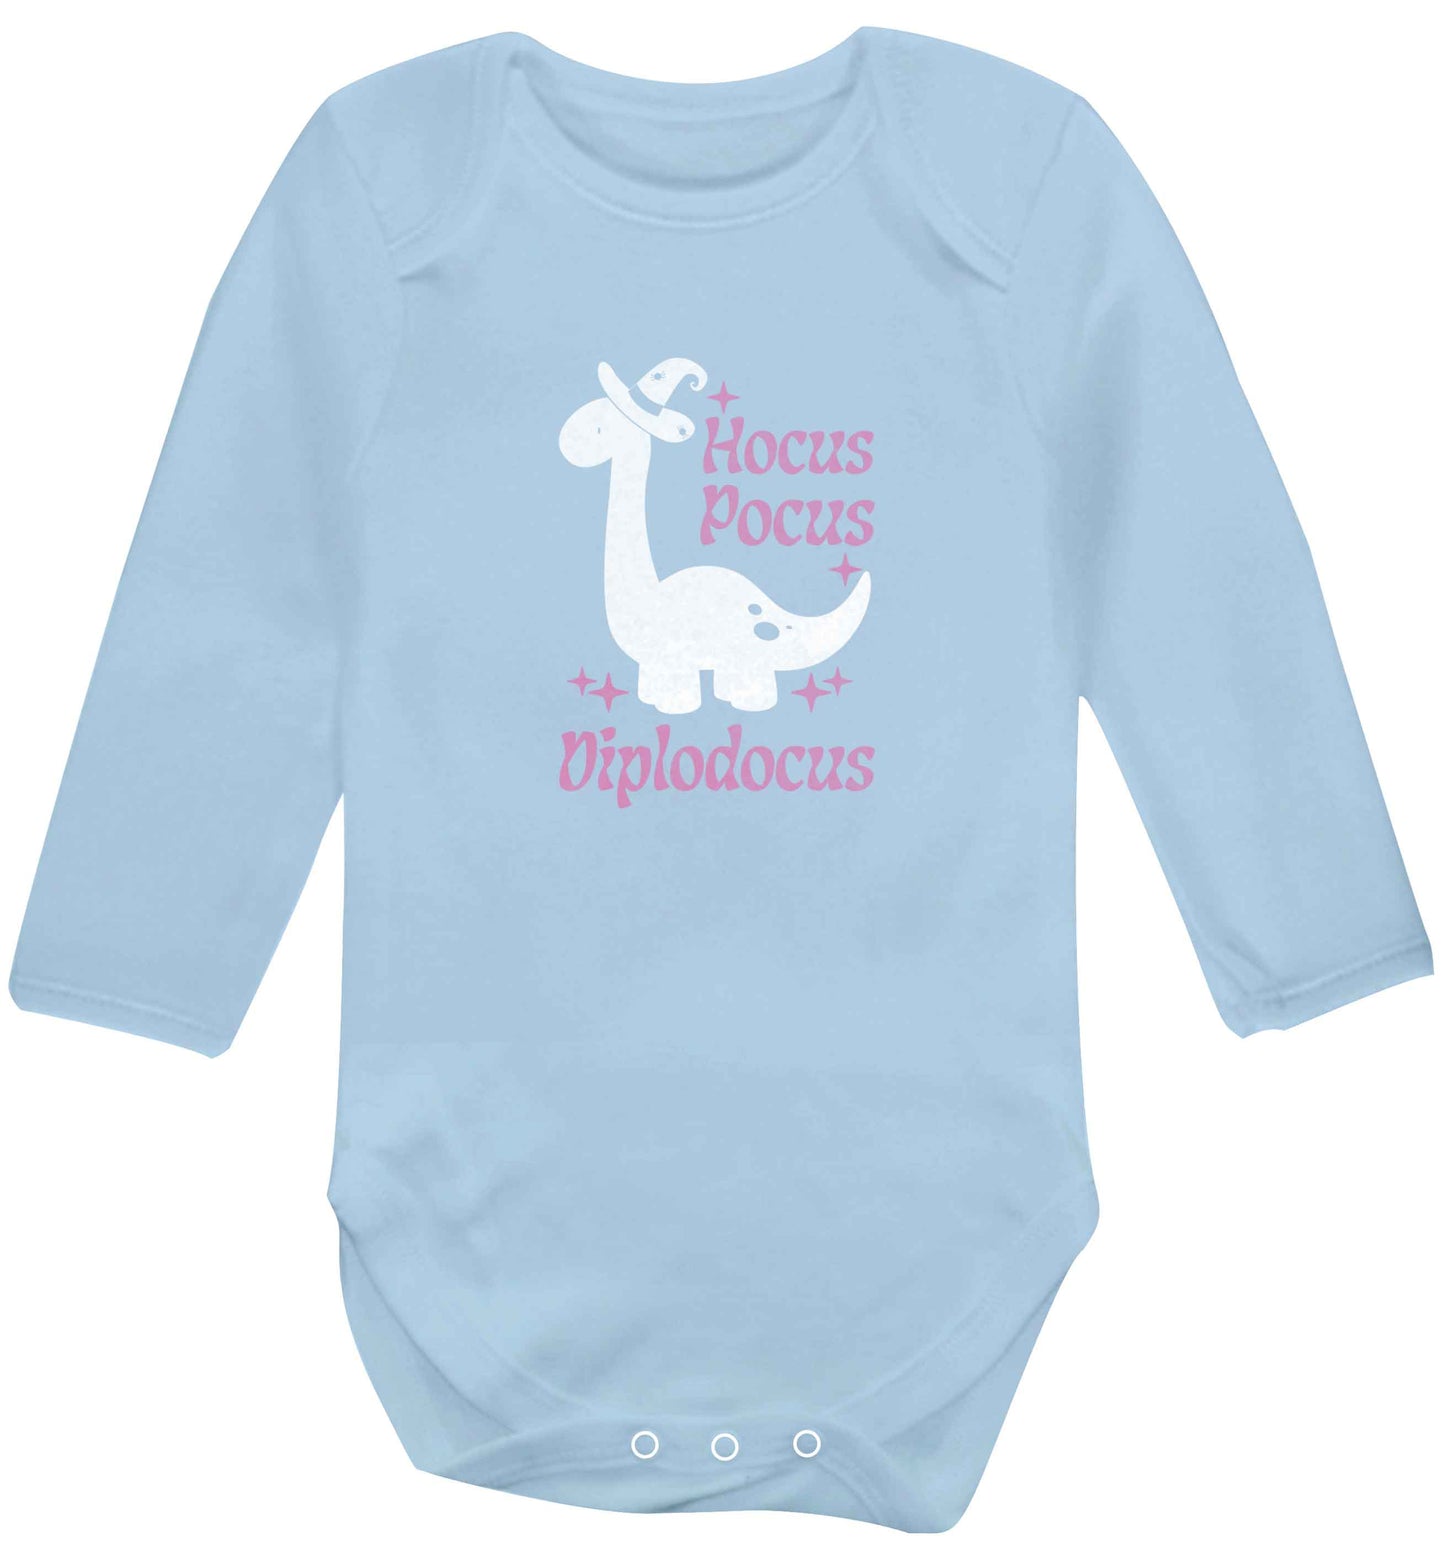 Hocus pocus diplodocus Kit baby vest long sleeved pale blue 6-12 months